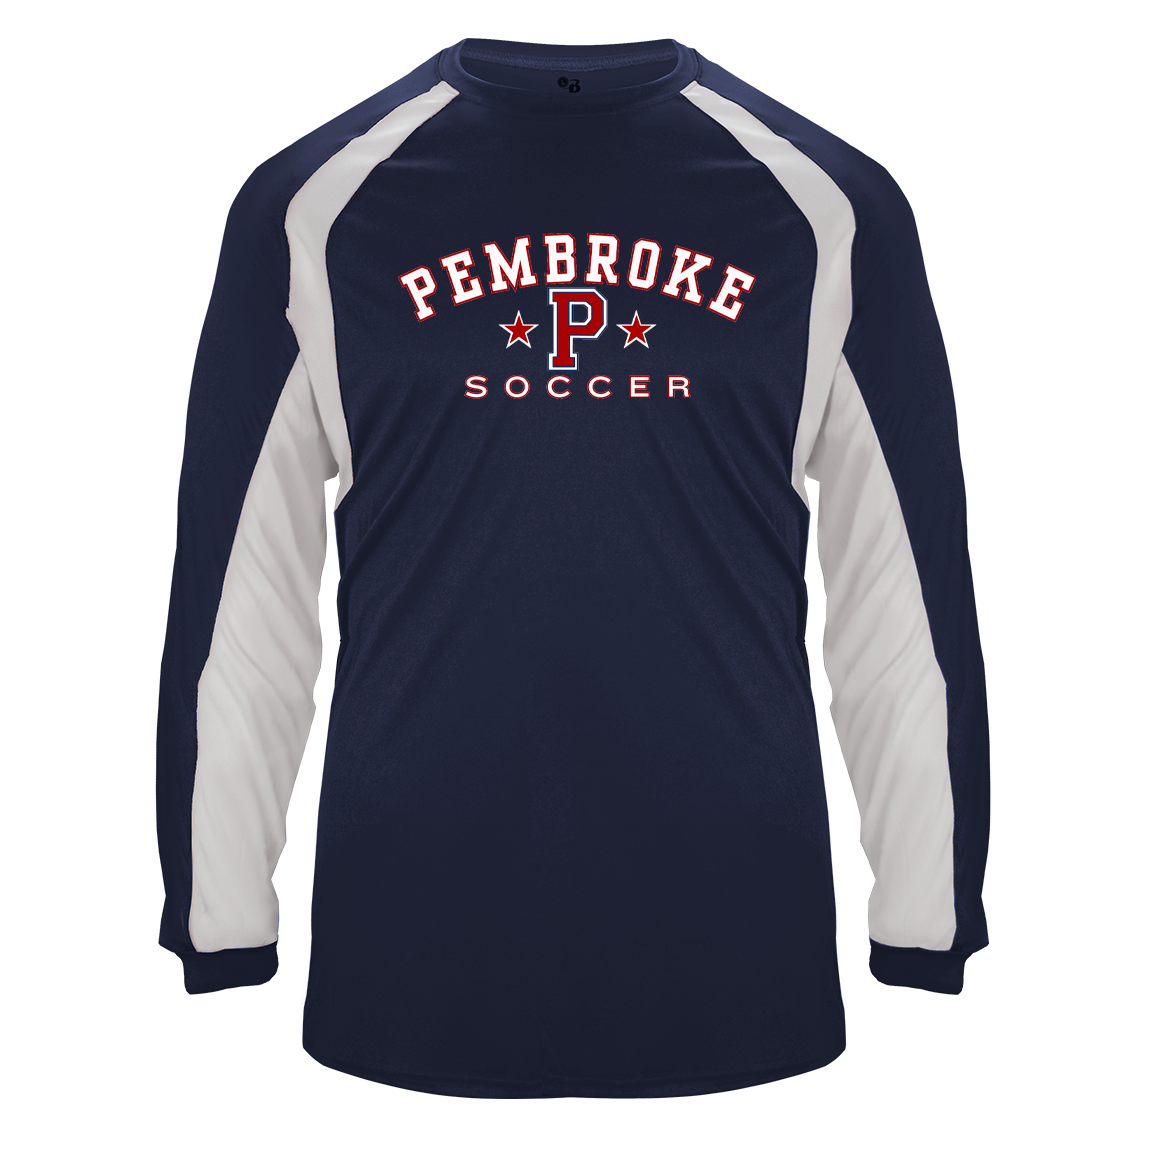 Pembroke Soccer Hook Long Sleeve Tee